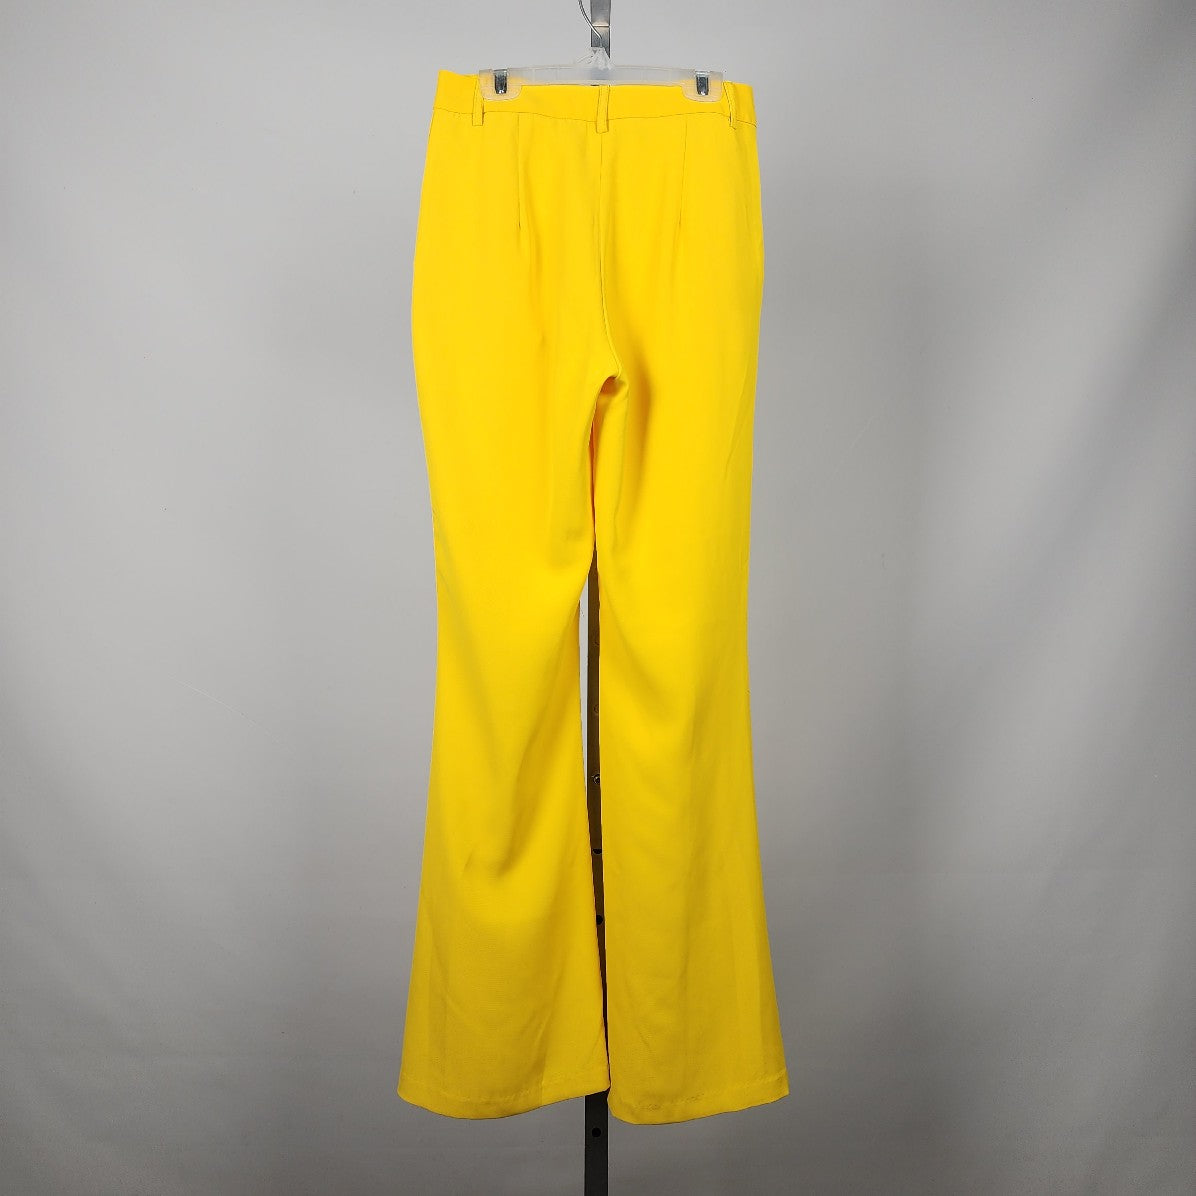 ZCRAVE Yellow Belle Bottom Dress Pants Size S